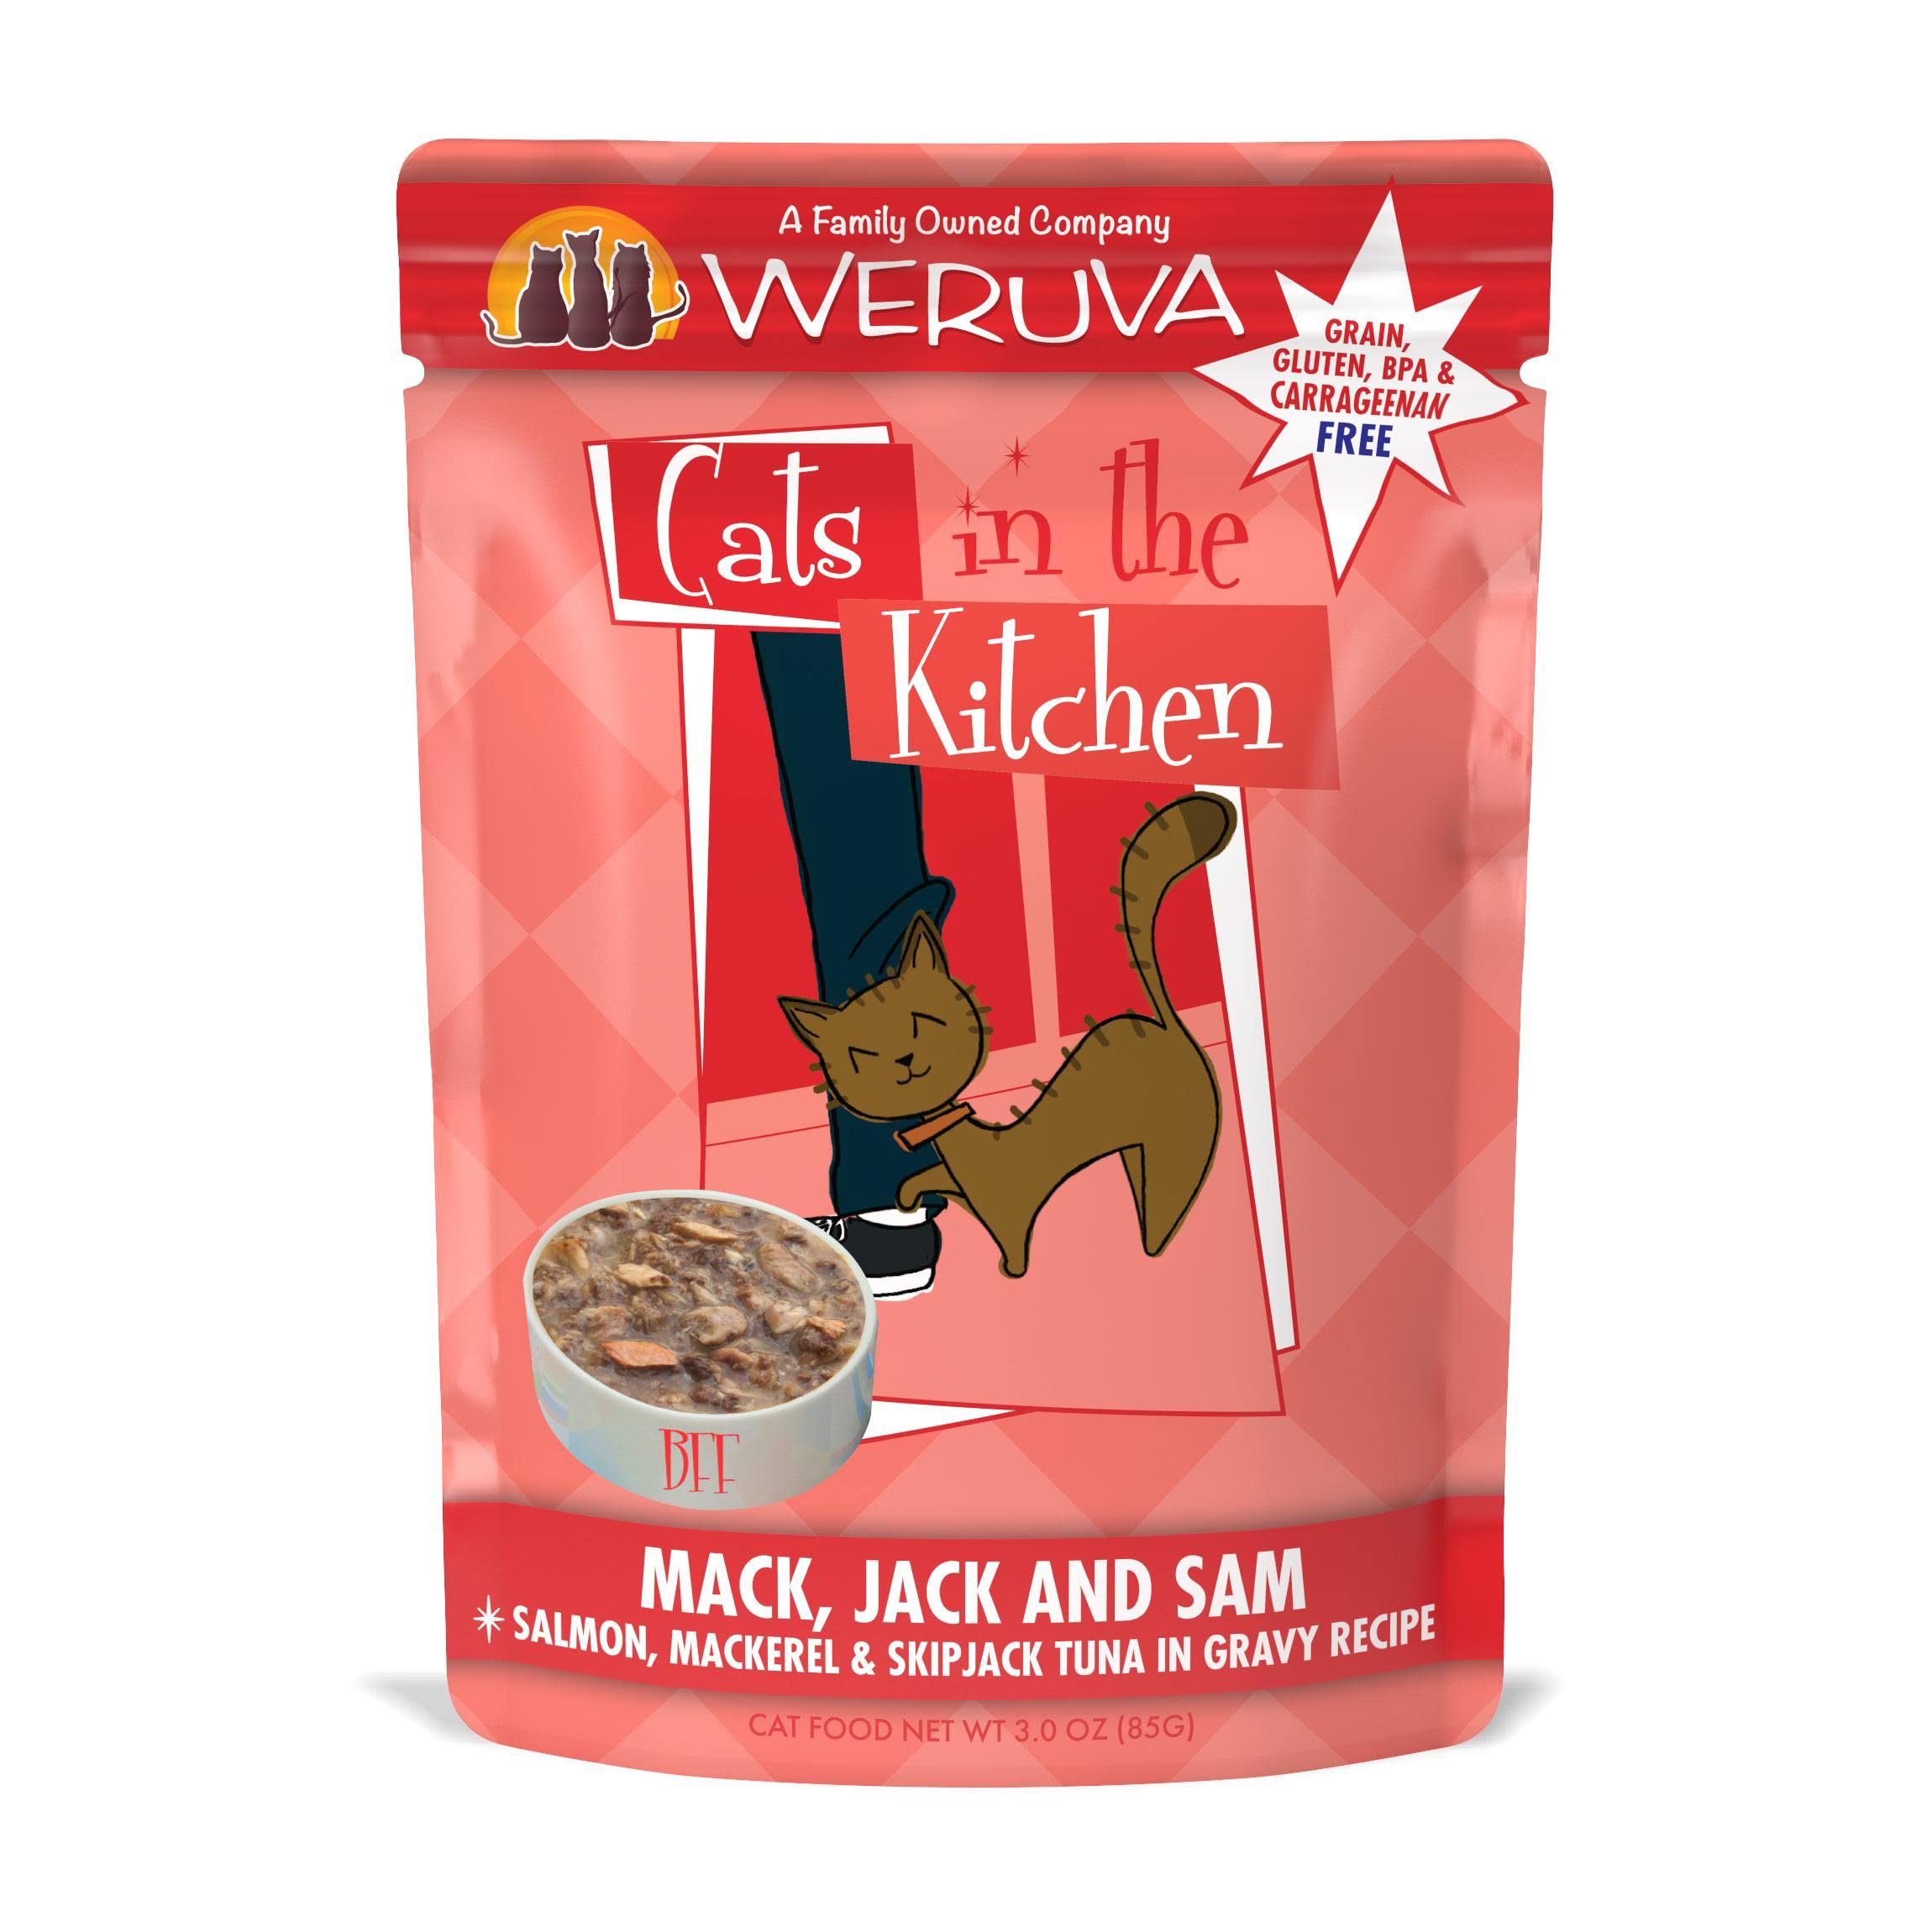 Weruva Cats in The Kitchen Mack Jack and Sam Cat Food - Salmon Mackerel and Skipjack Tuna in Gravy